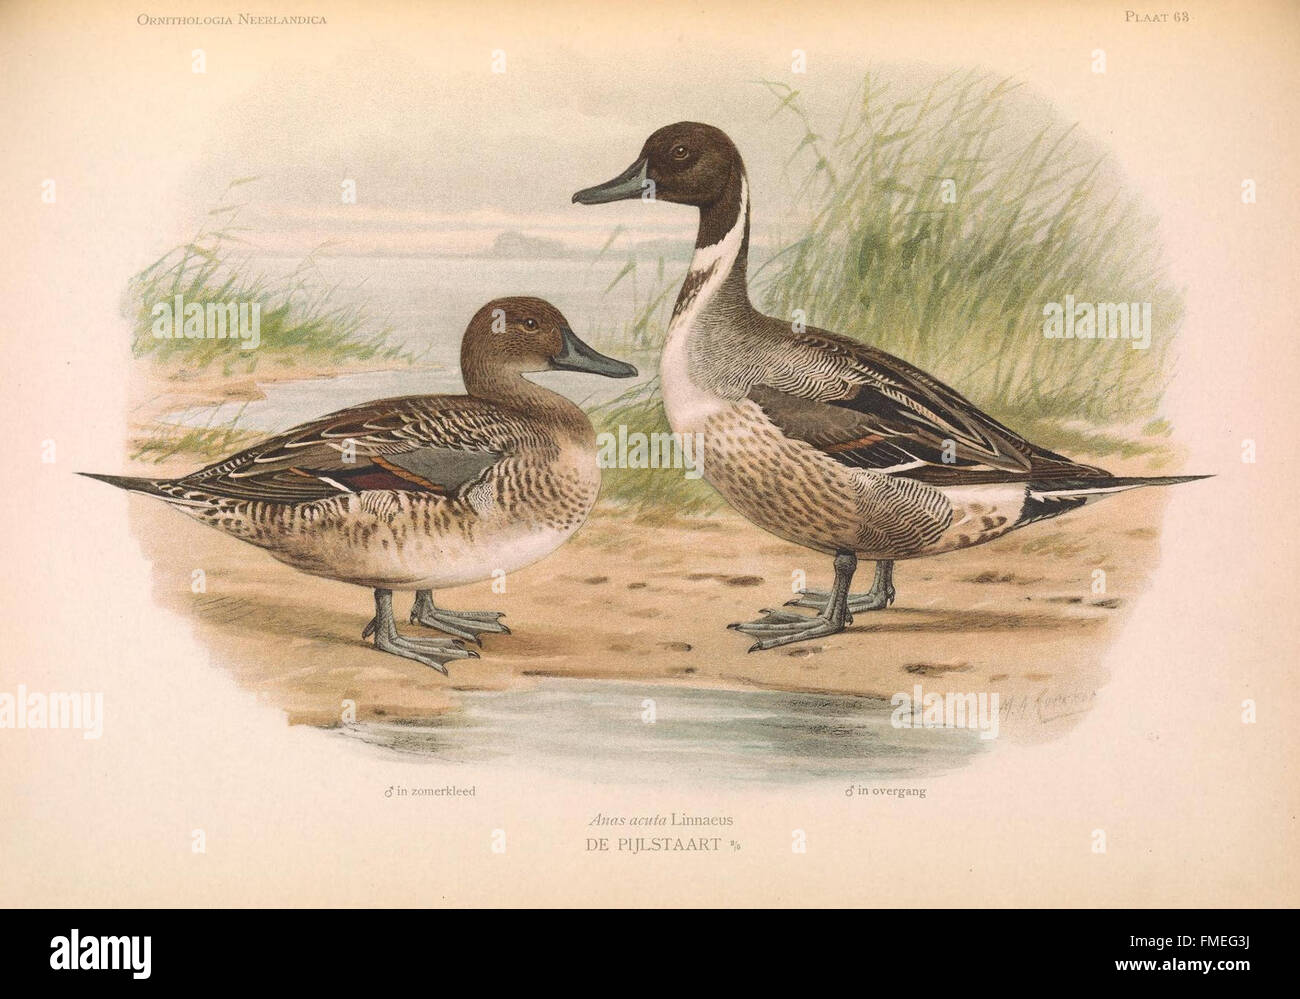 Ornithologia Neerlandica (PLAAT 63) Stockfoto